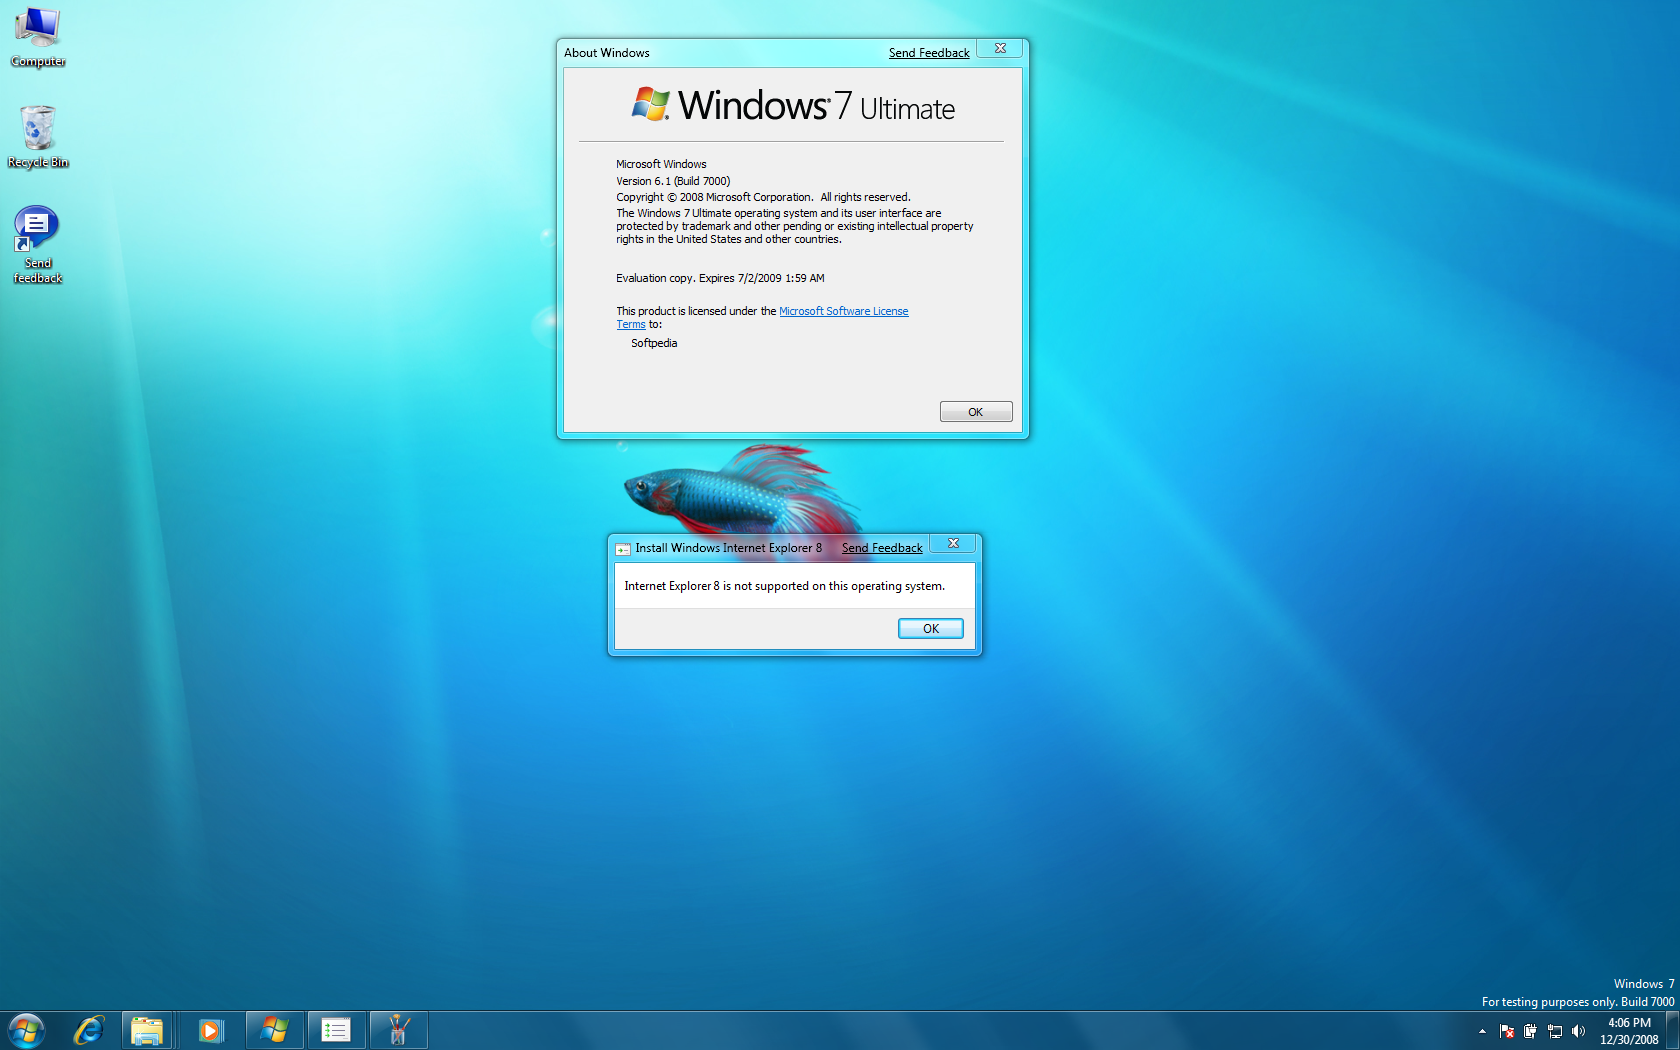 how to update internet explorer 8 windows 7